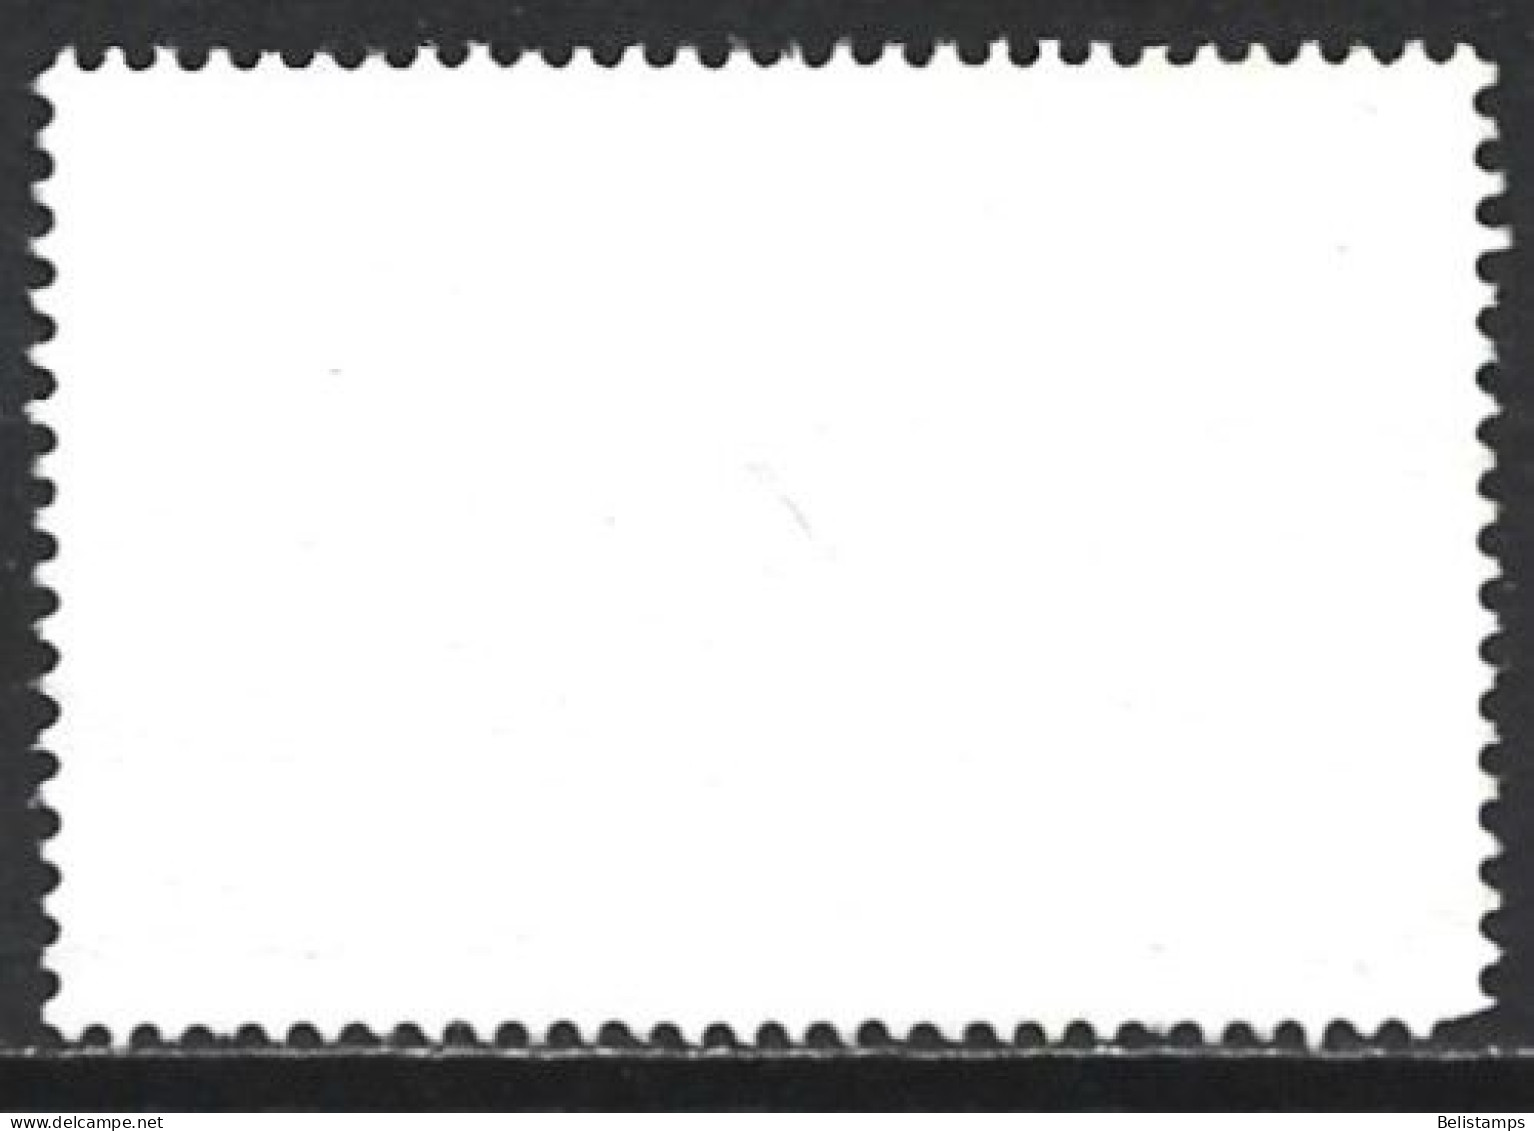 Greece 1979. Scott #1296 (U) Locomotives - Used Stamps